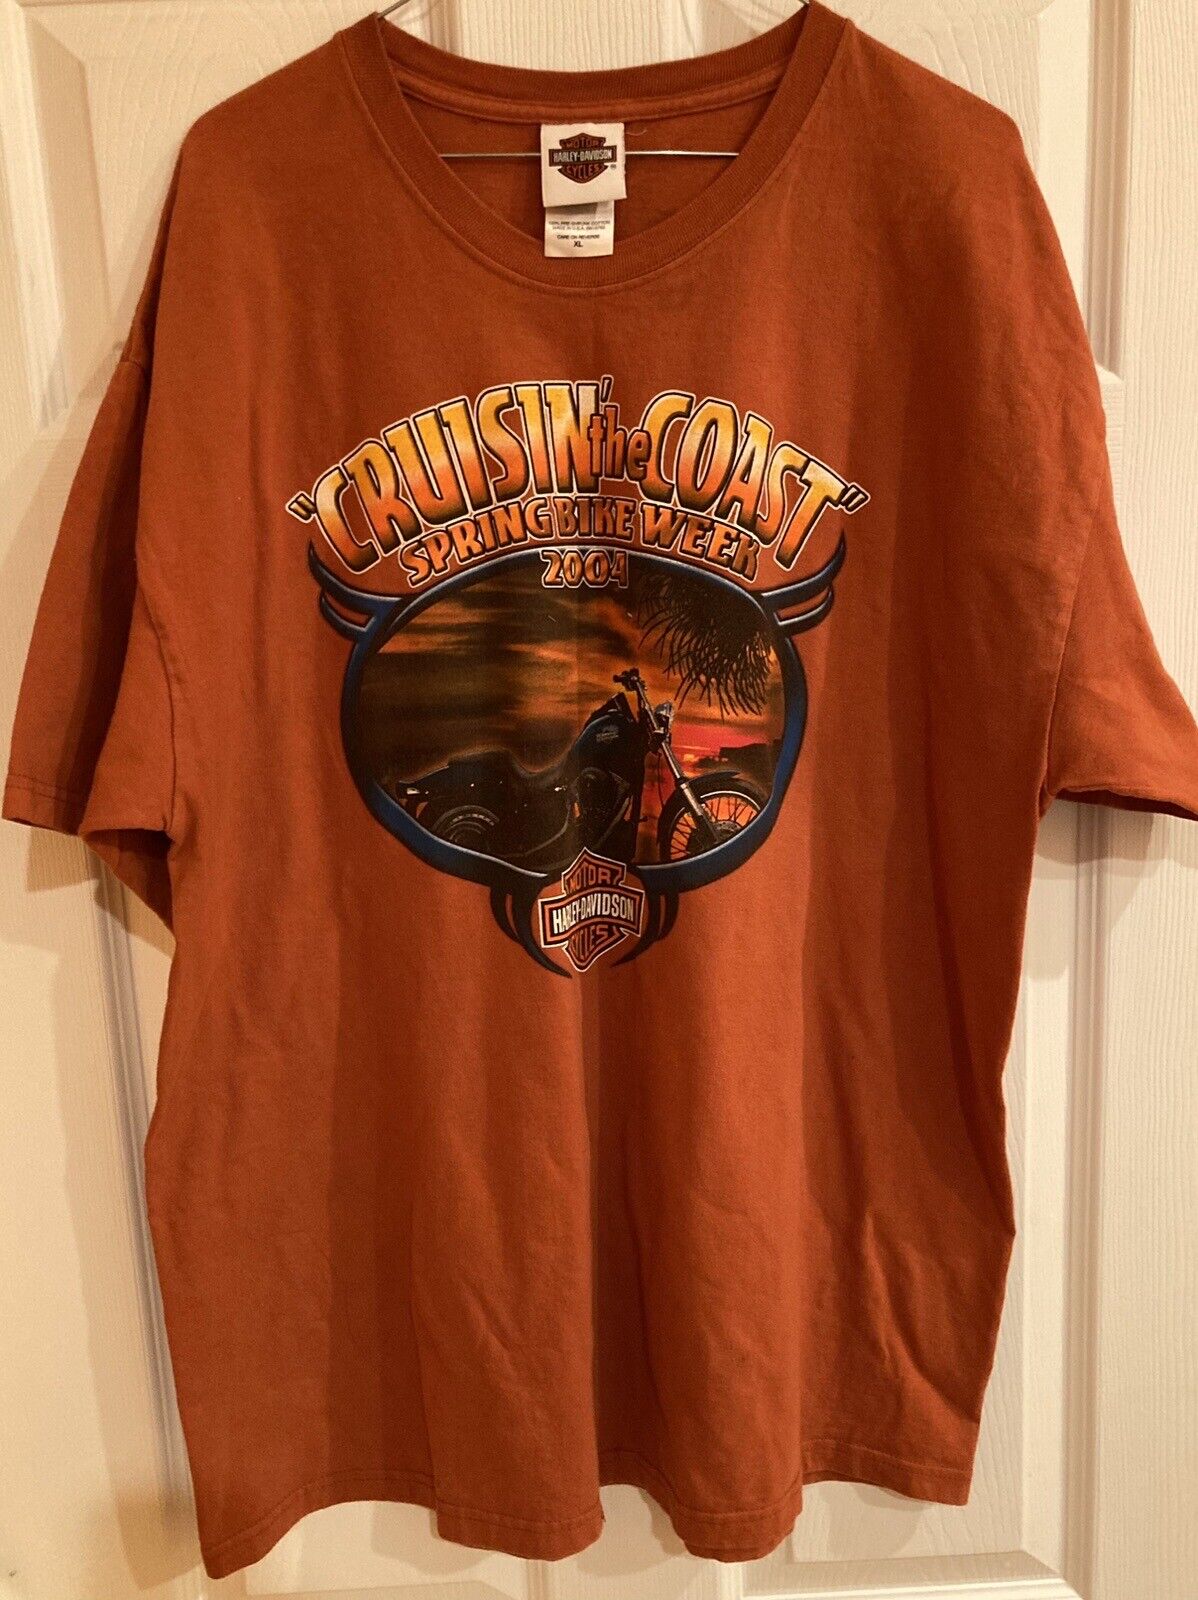 2004 Harley Davidson Shirt Cruisin’ The Coast Spring Bike Week Orange XL